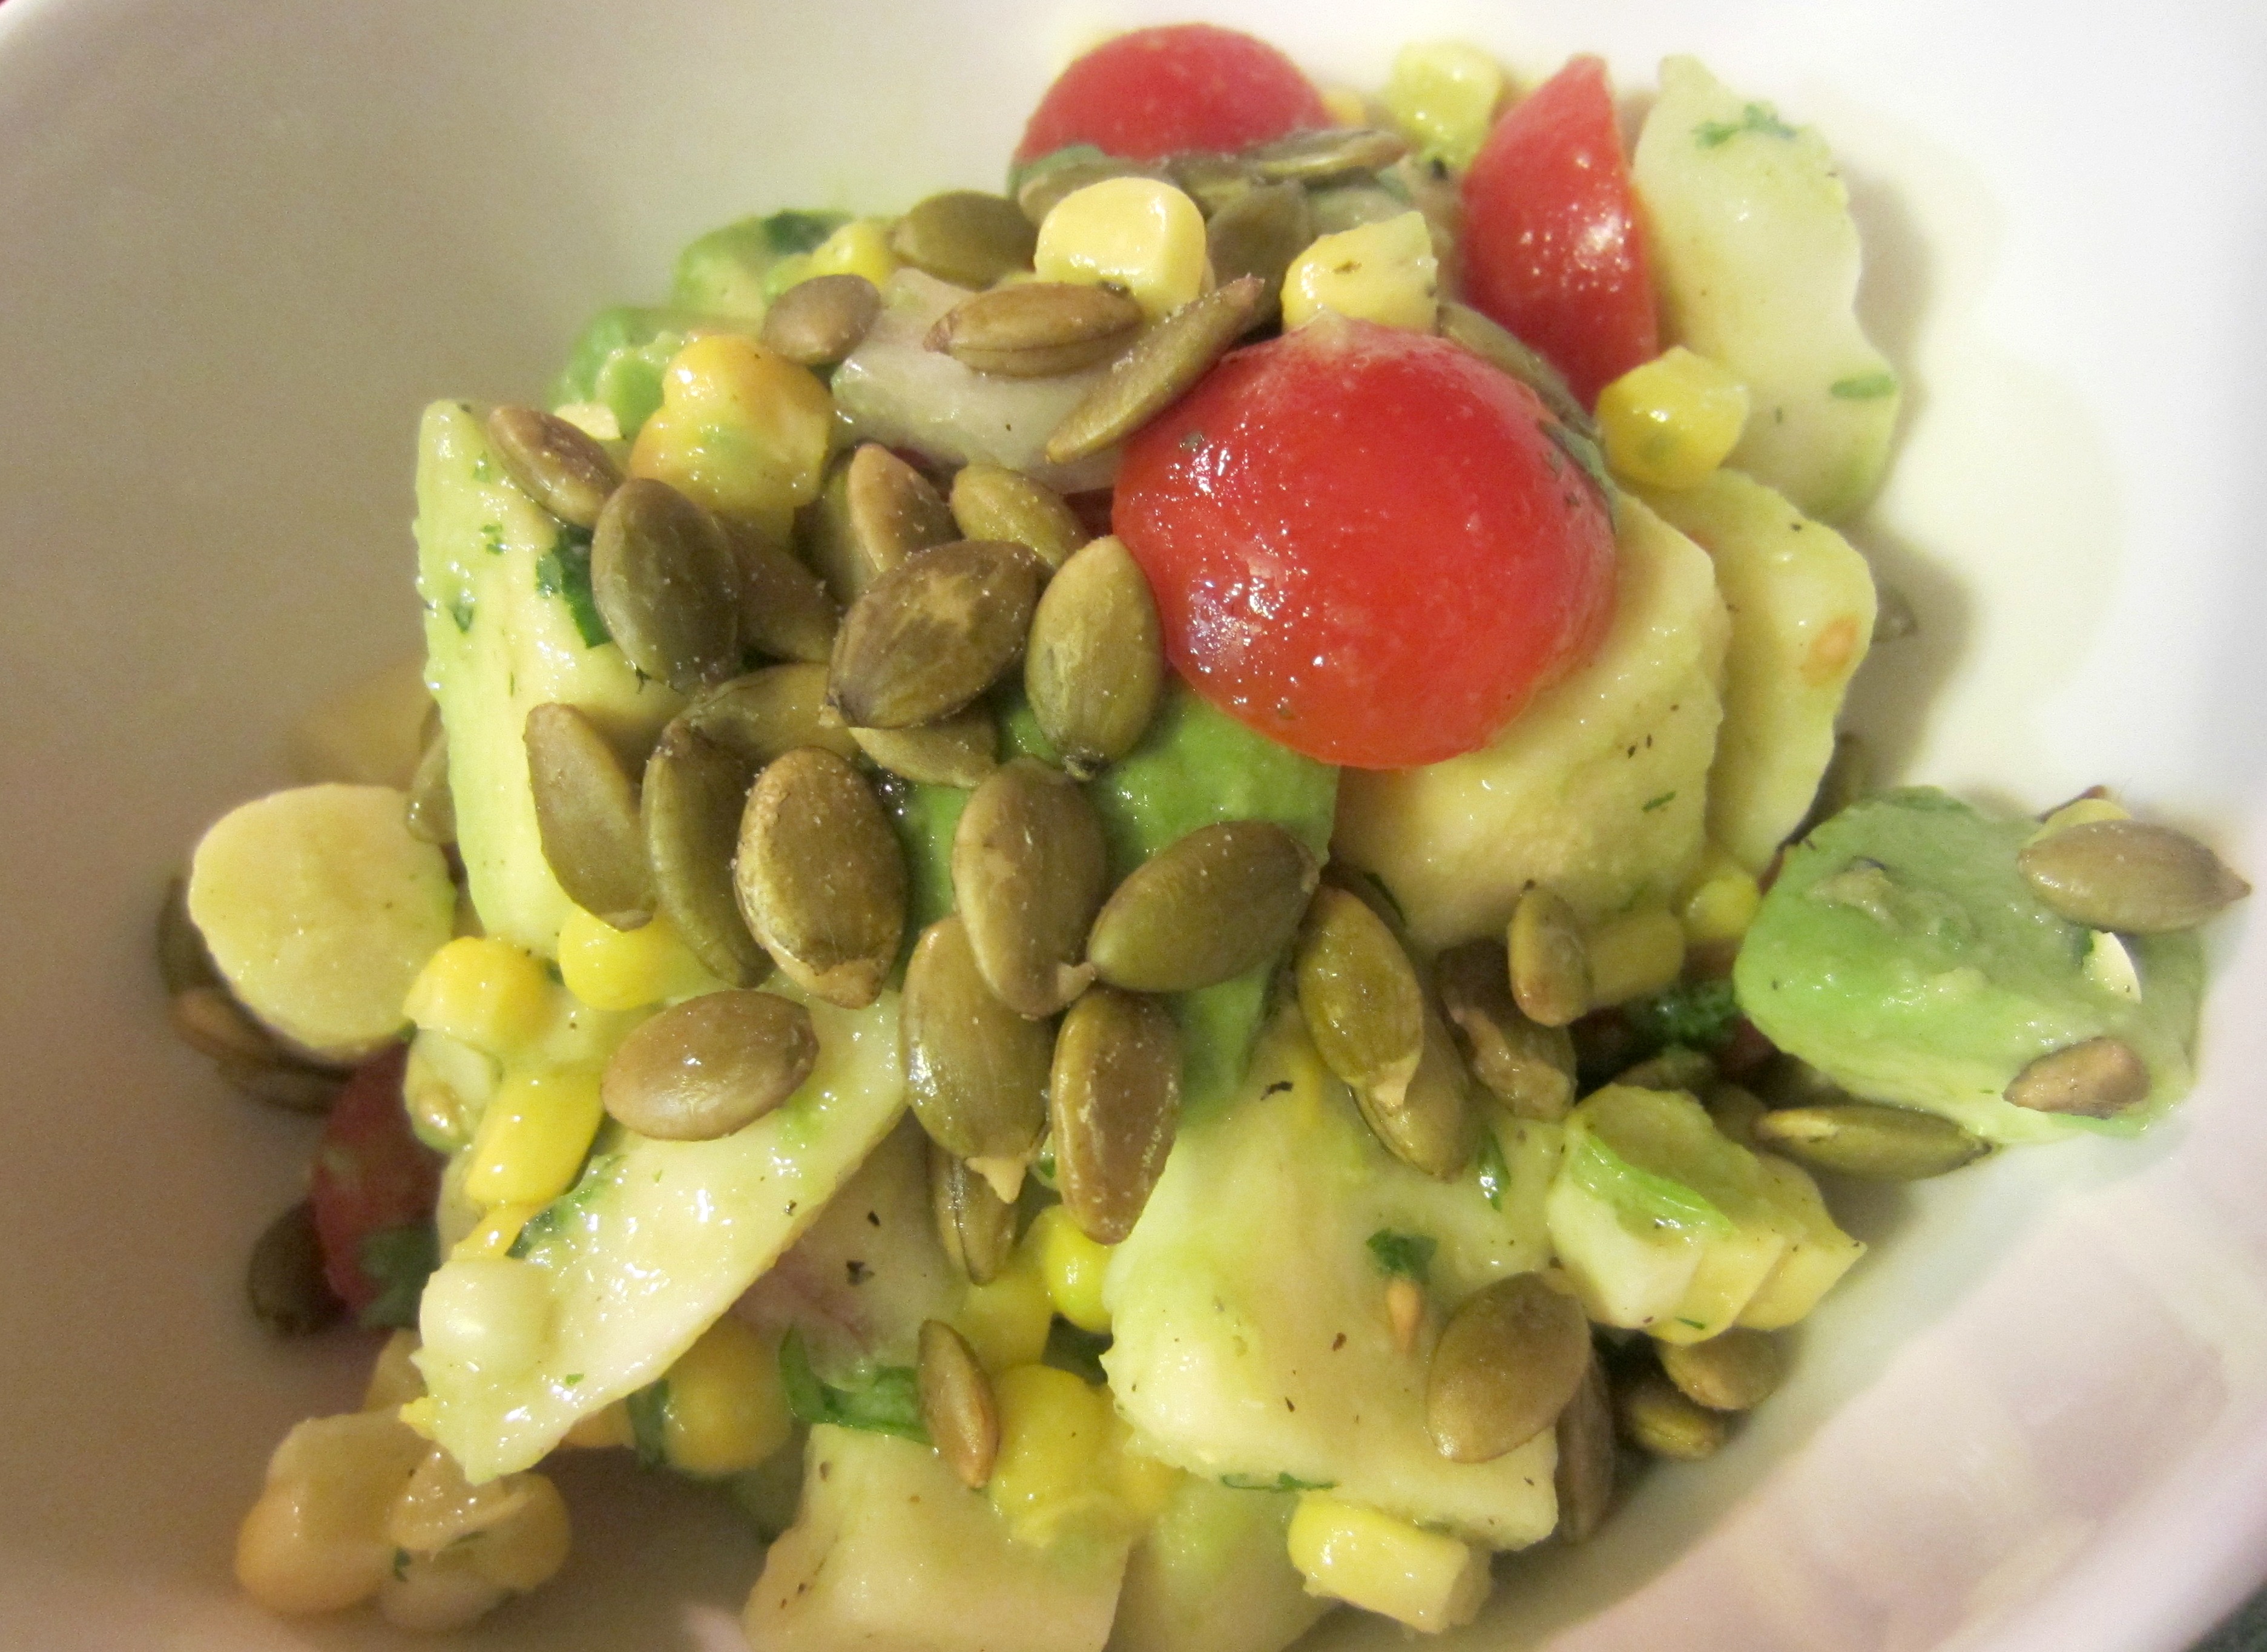 Avocado and hearts of palm healthy salad recipe